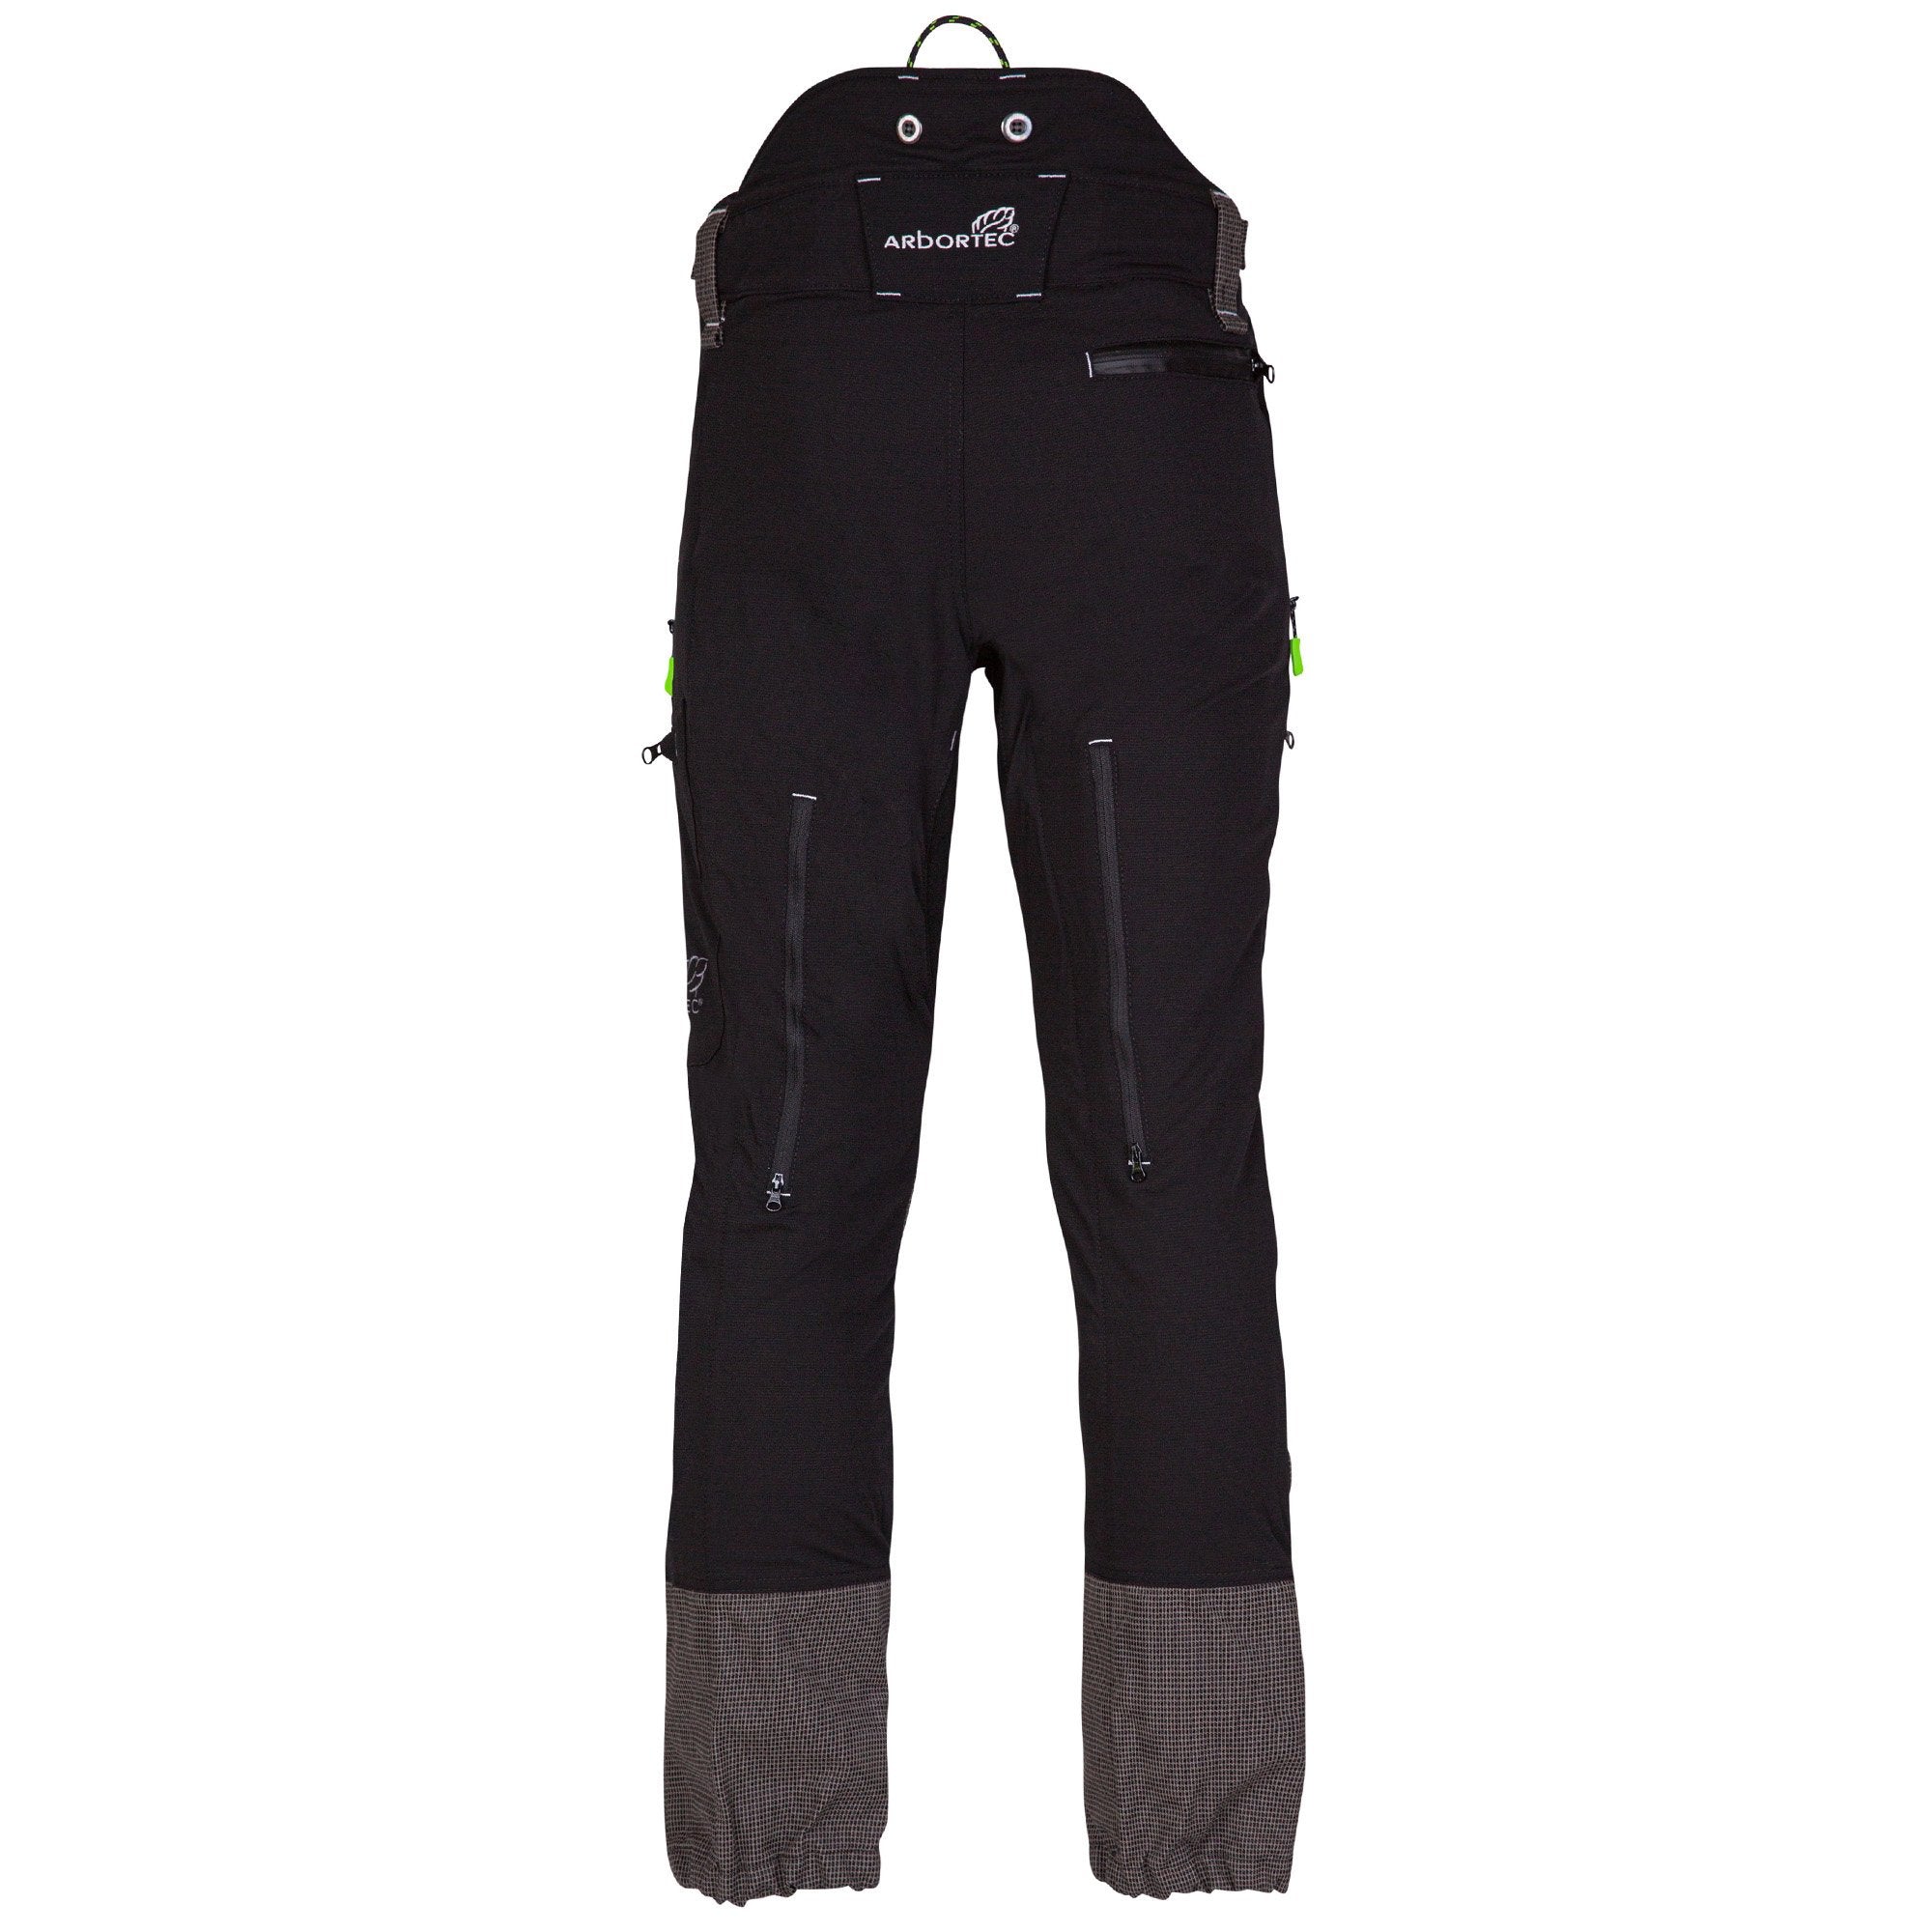 AT4060 Breatheflex Pro Trousers Design A Class 1 - Black